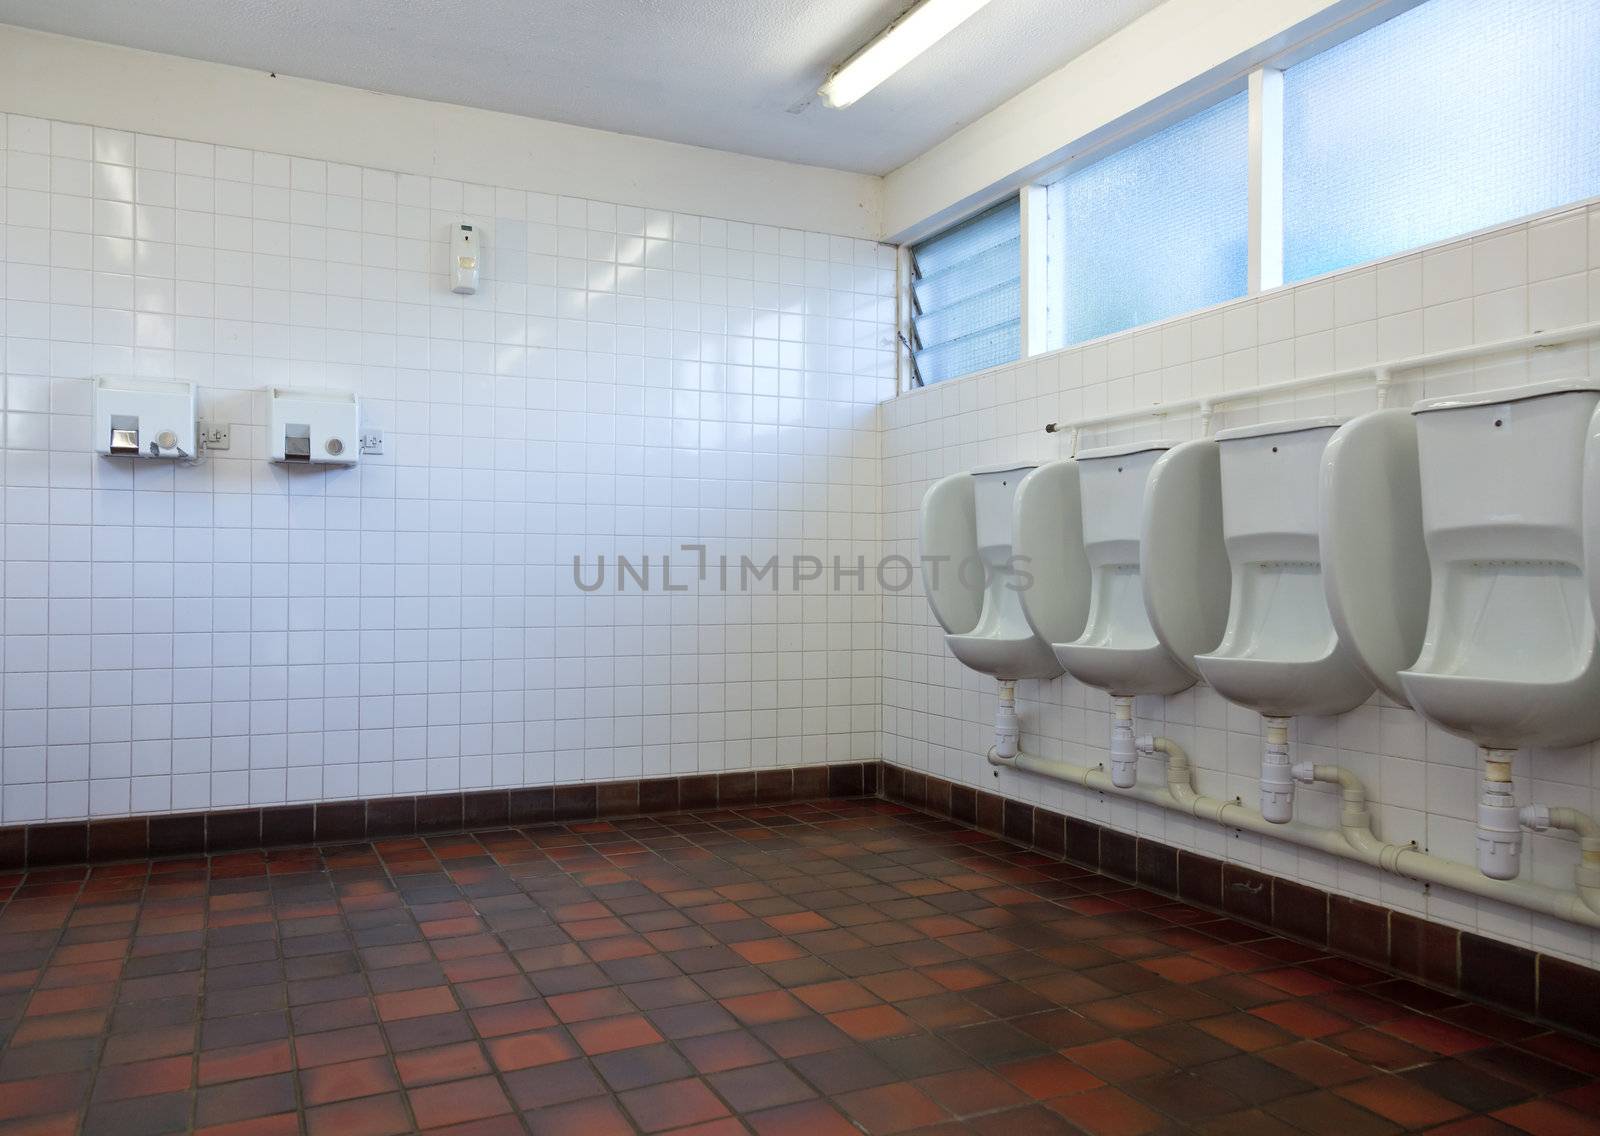 Public toilet interior by naumoid